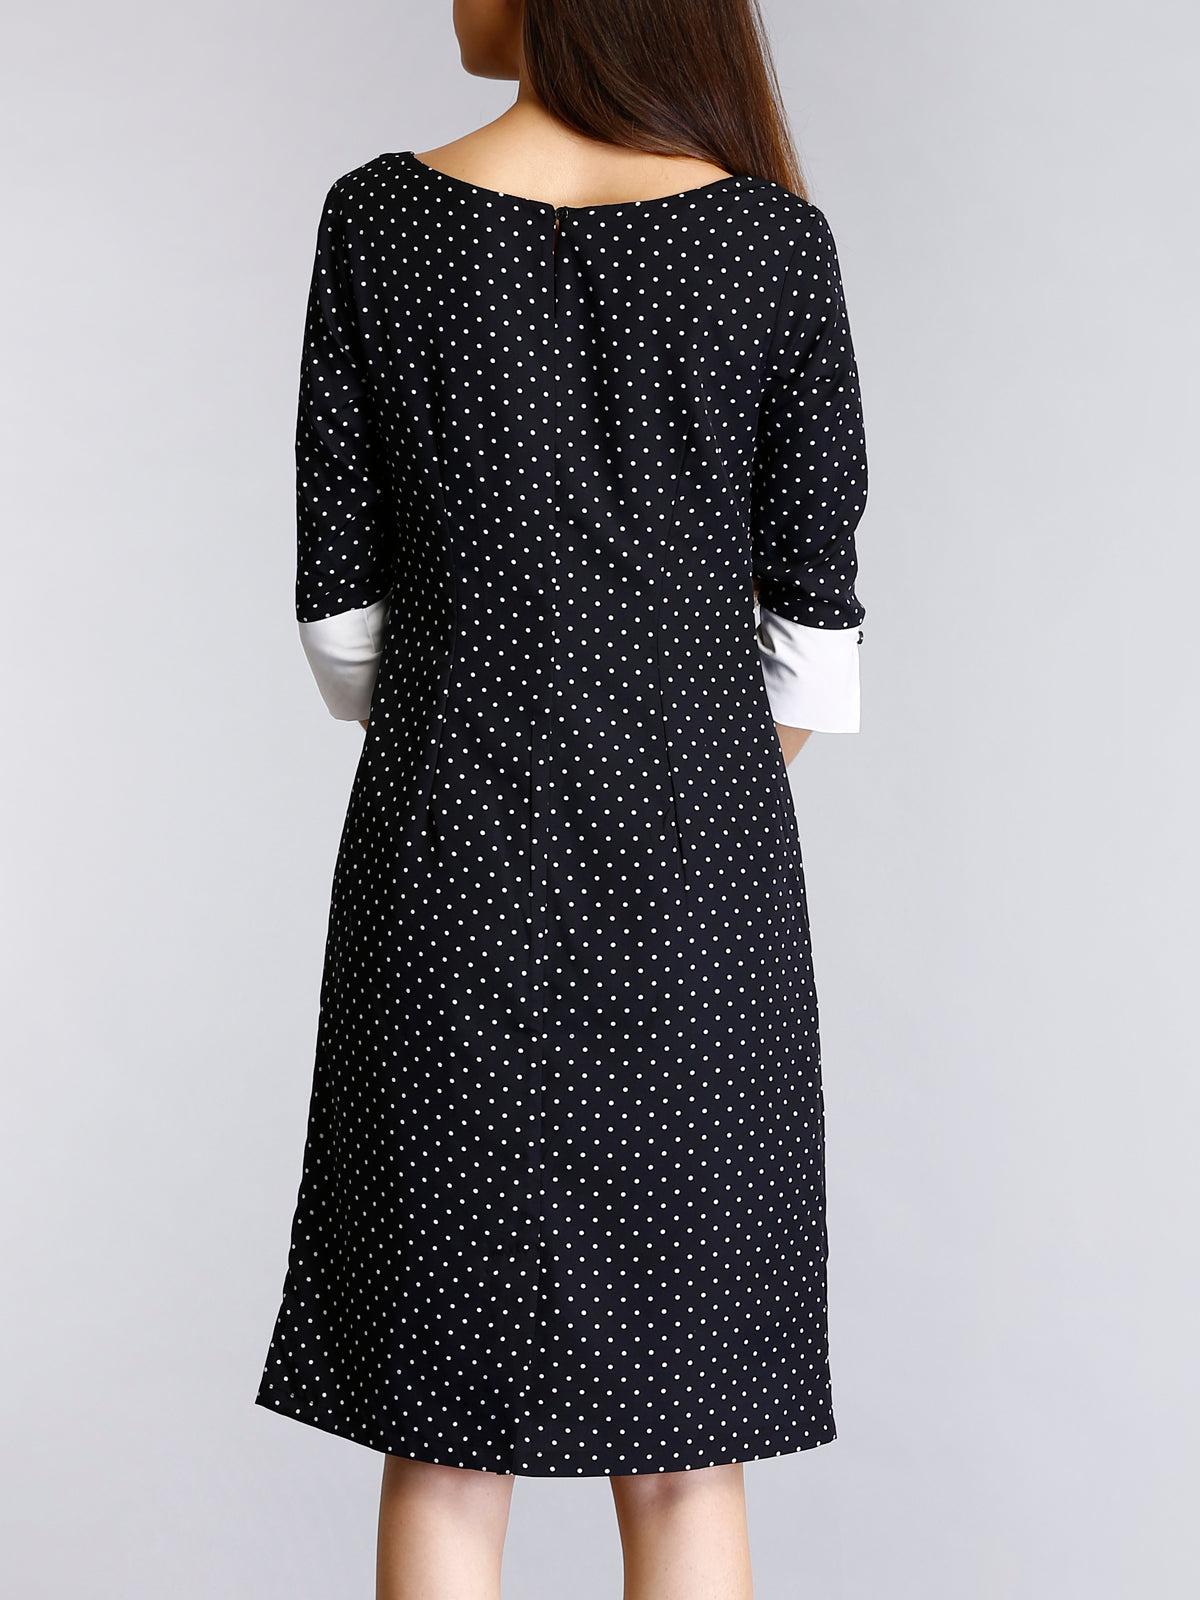 Colour Block Polka Dot Shift Dress - Black and White| Formal Dresses